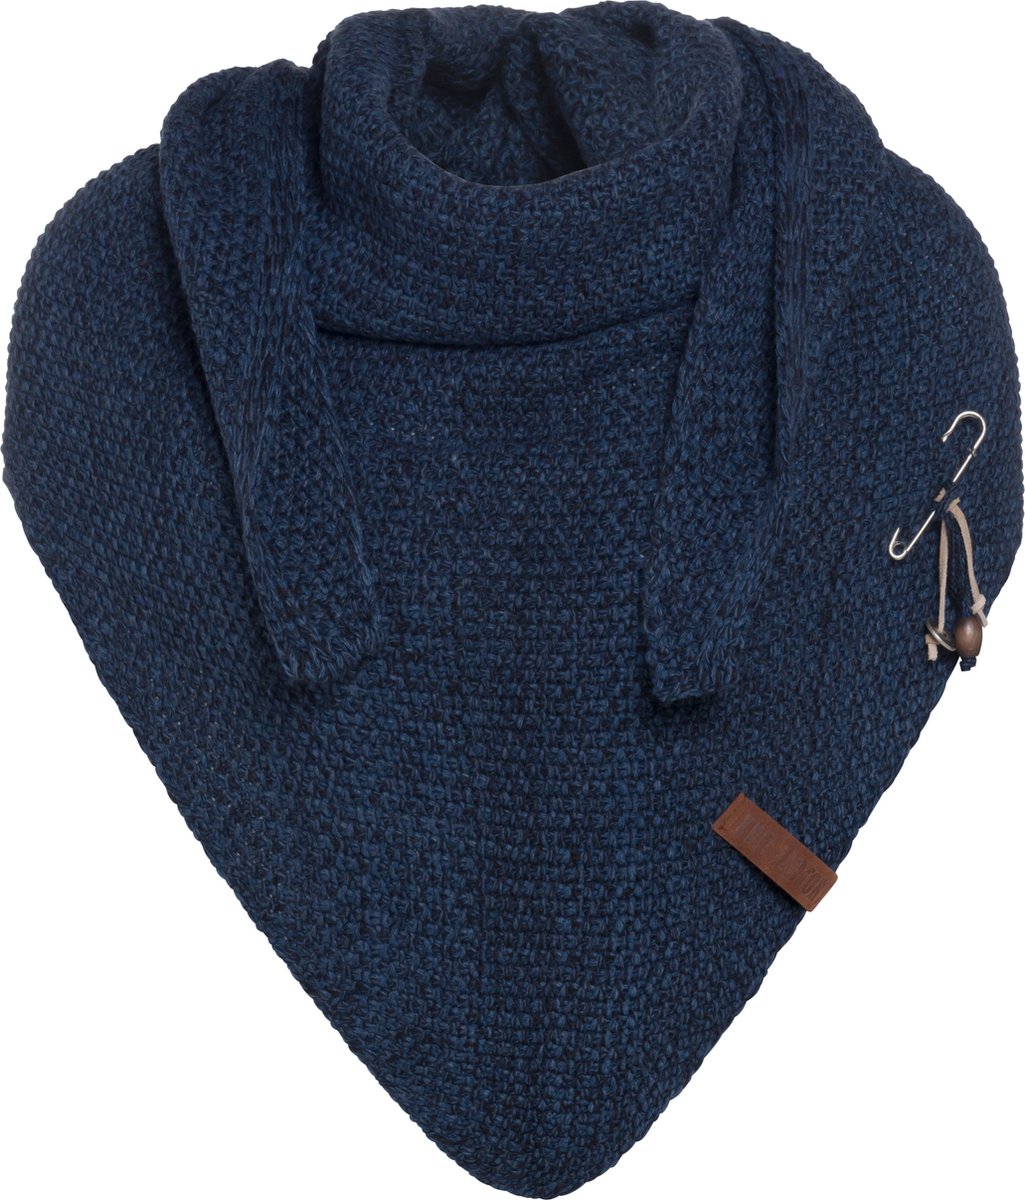 Knit Factory Coco Gebreide Omslagdoek - Driehoek Sjaal Dames - Dames sjaal - Wintersjaal - Stola - Wollen sjaal - Blauw gemelêerde sjaal - Jeans/Navy - 190x85 cm - Inclusief sierspeld